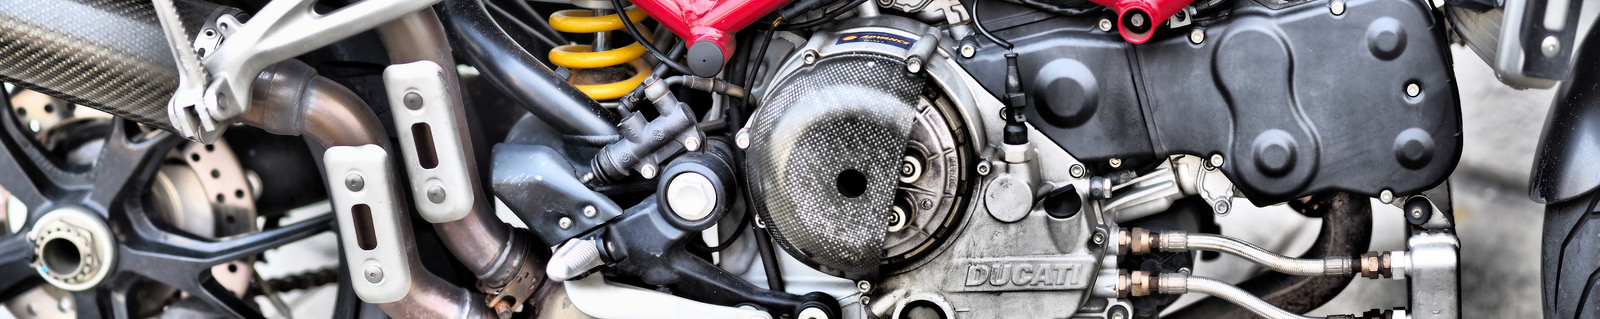 Ducati Monster S4R Engine